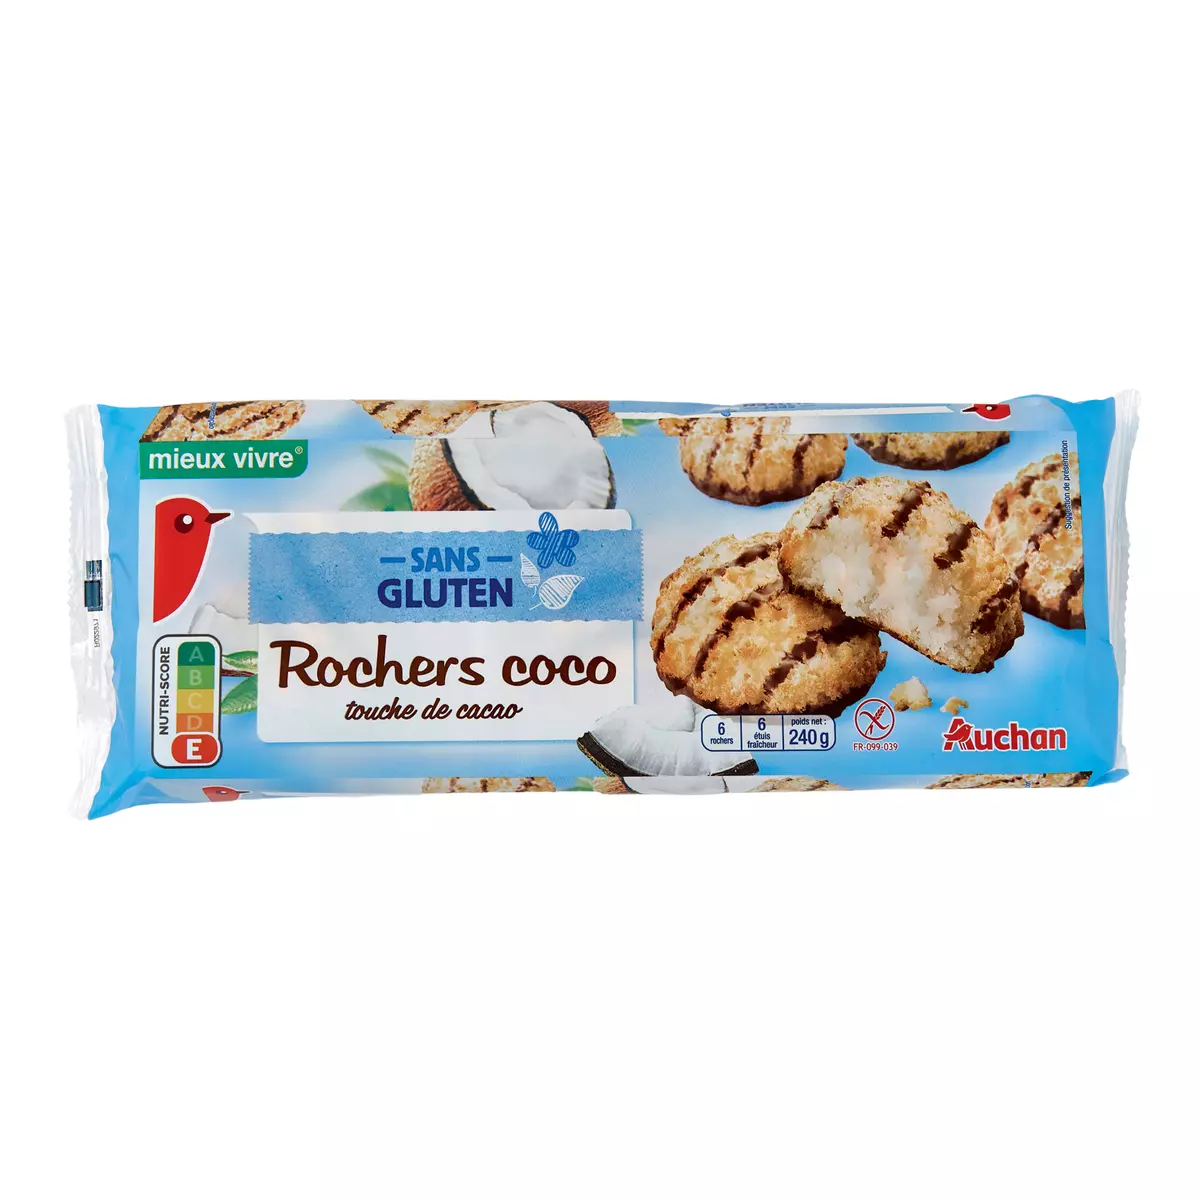 AUCHAN MIEUX VIVRE Biscuits rochers coco sans gluten sachets individuels 6 biscuits 240g